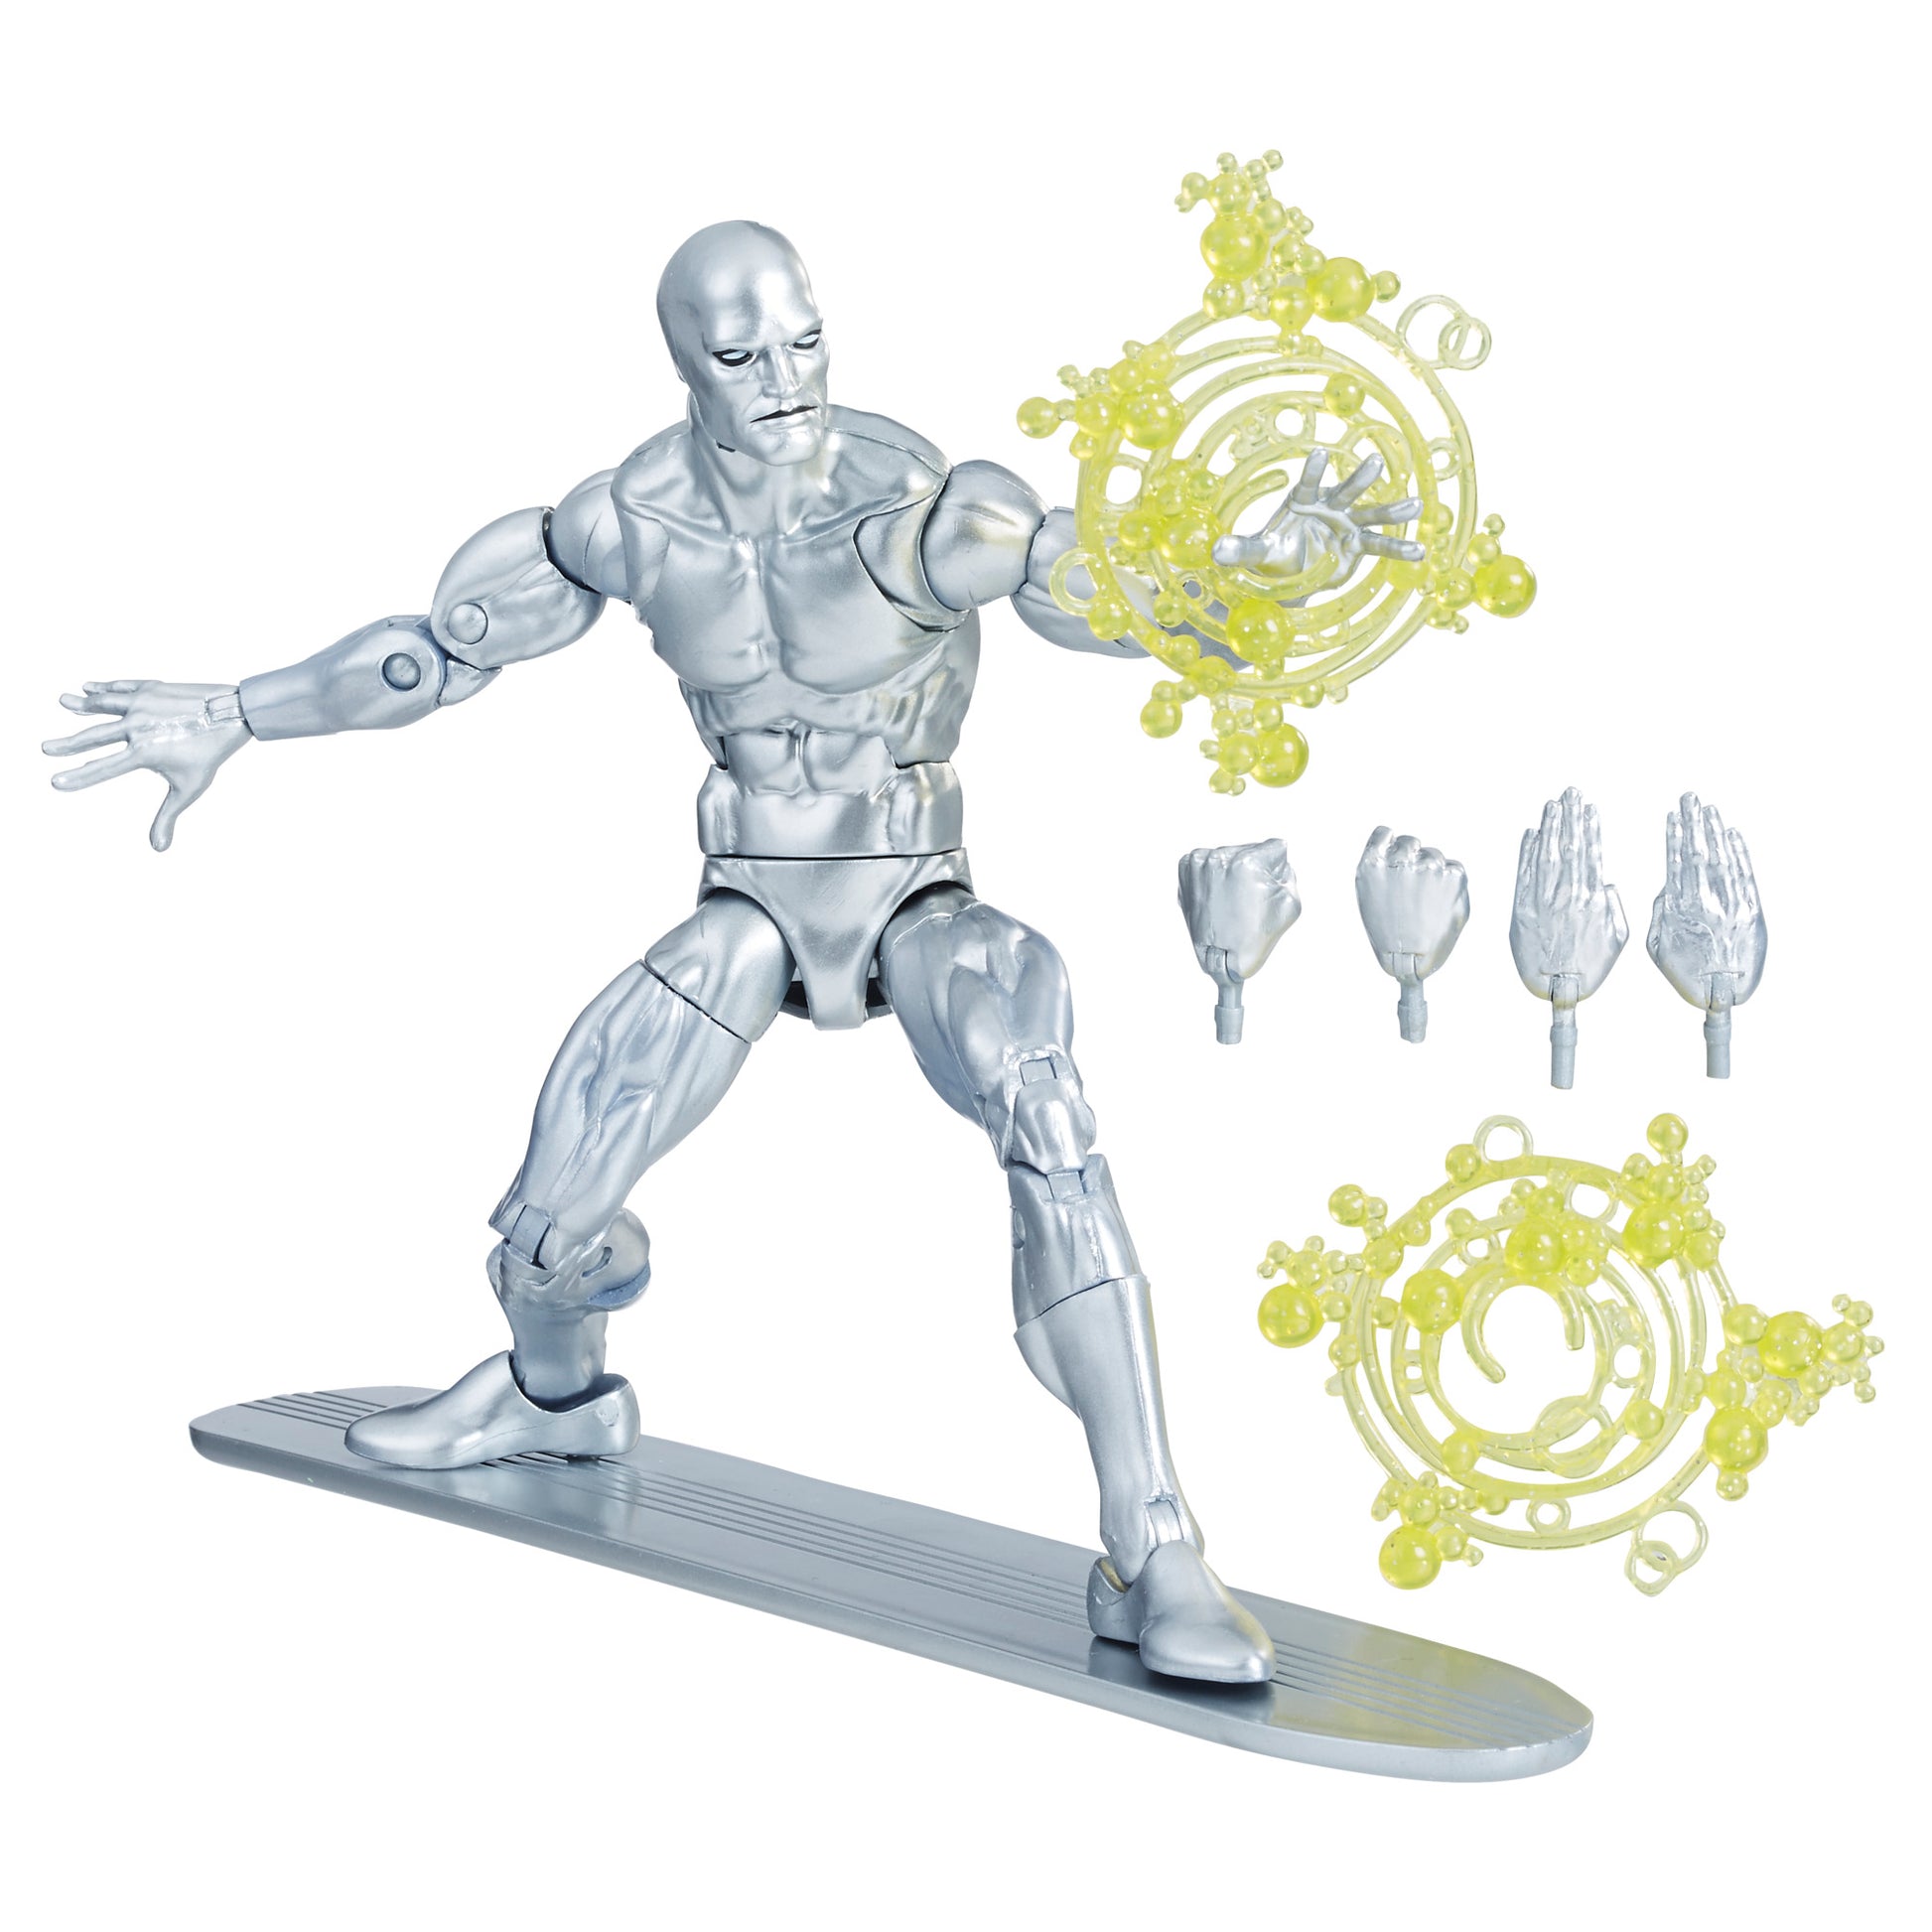 Marvel Legends Series 6-inch Silver Surfer Action Figure